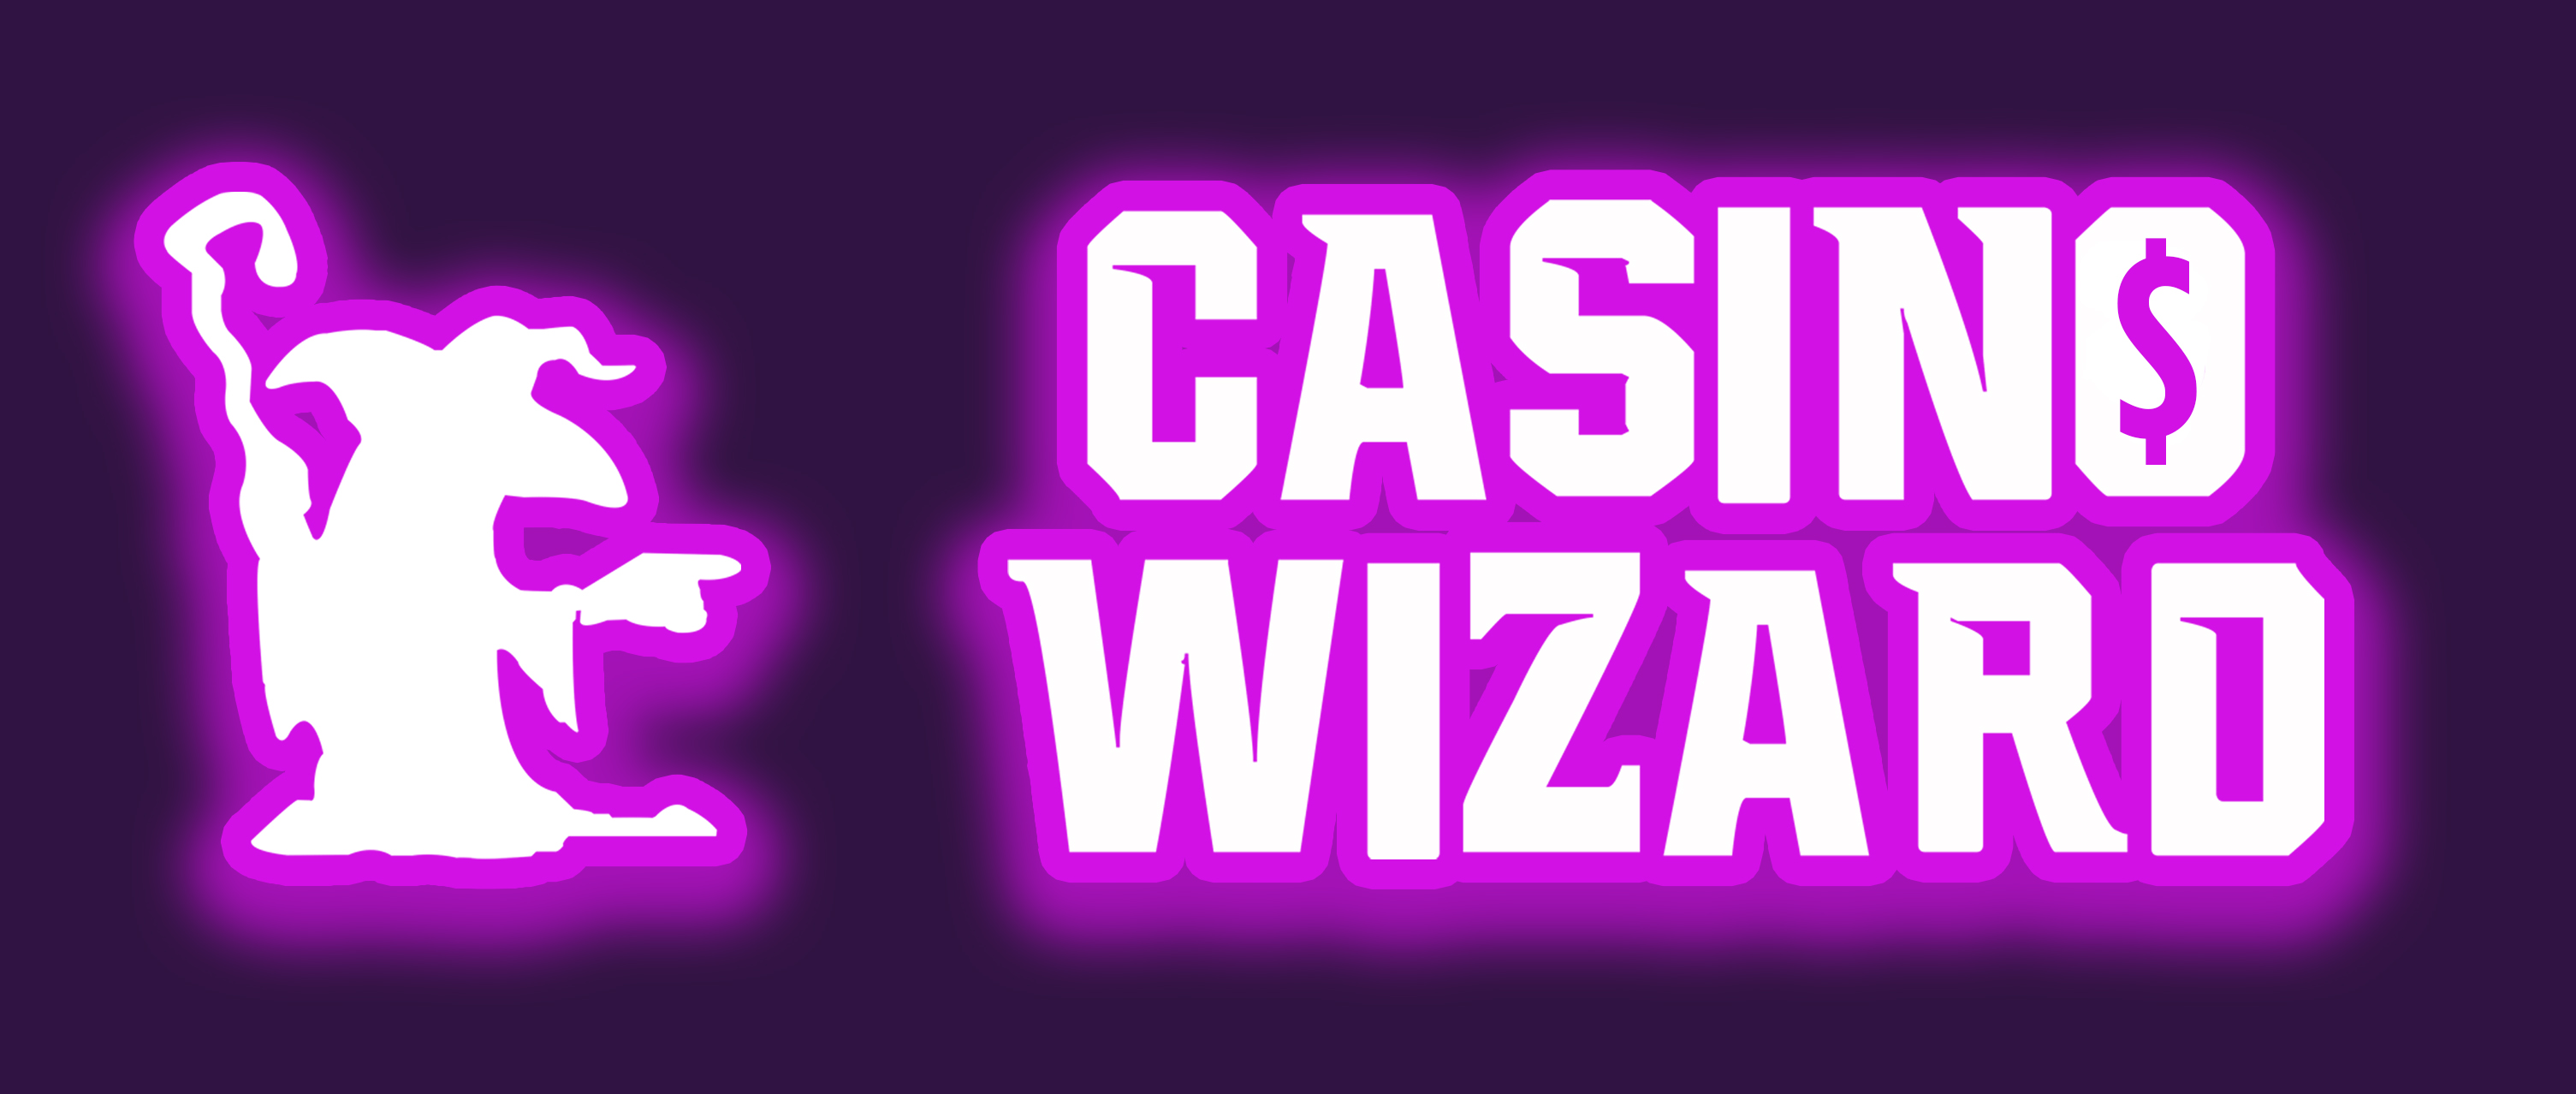 The Casino Wizard